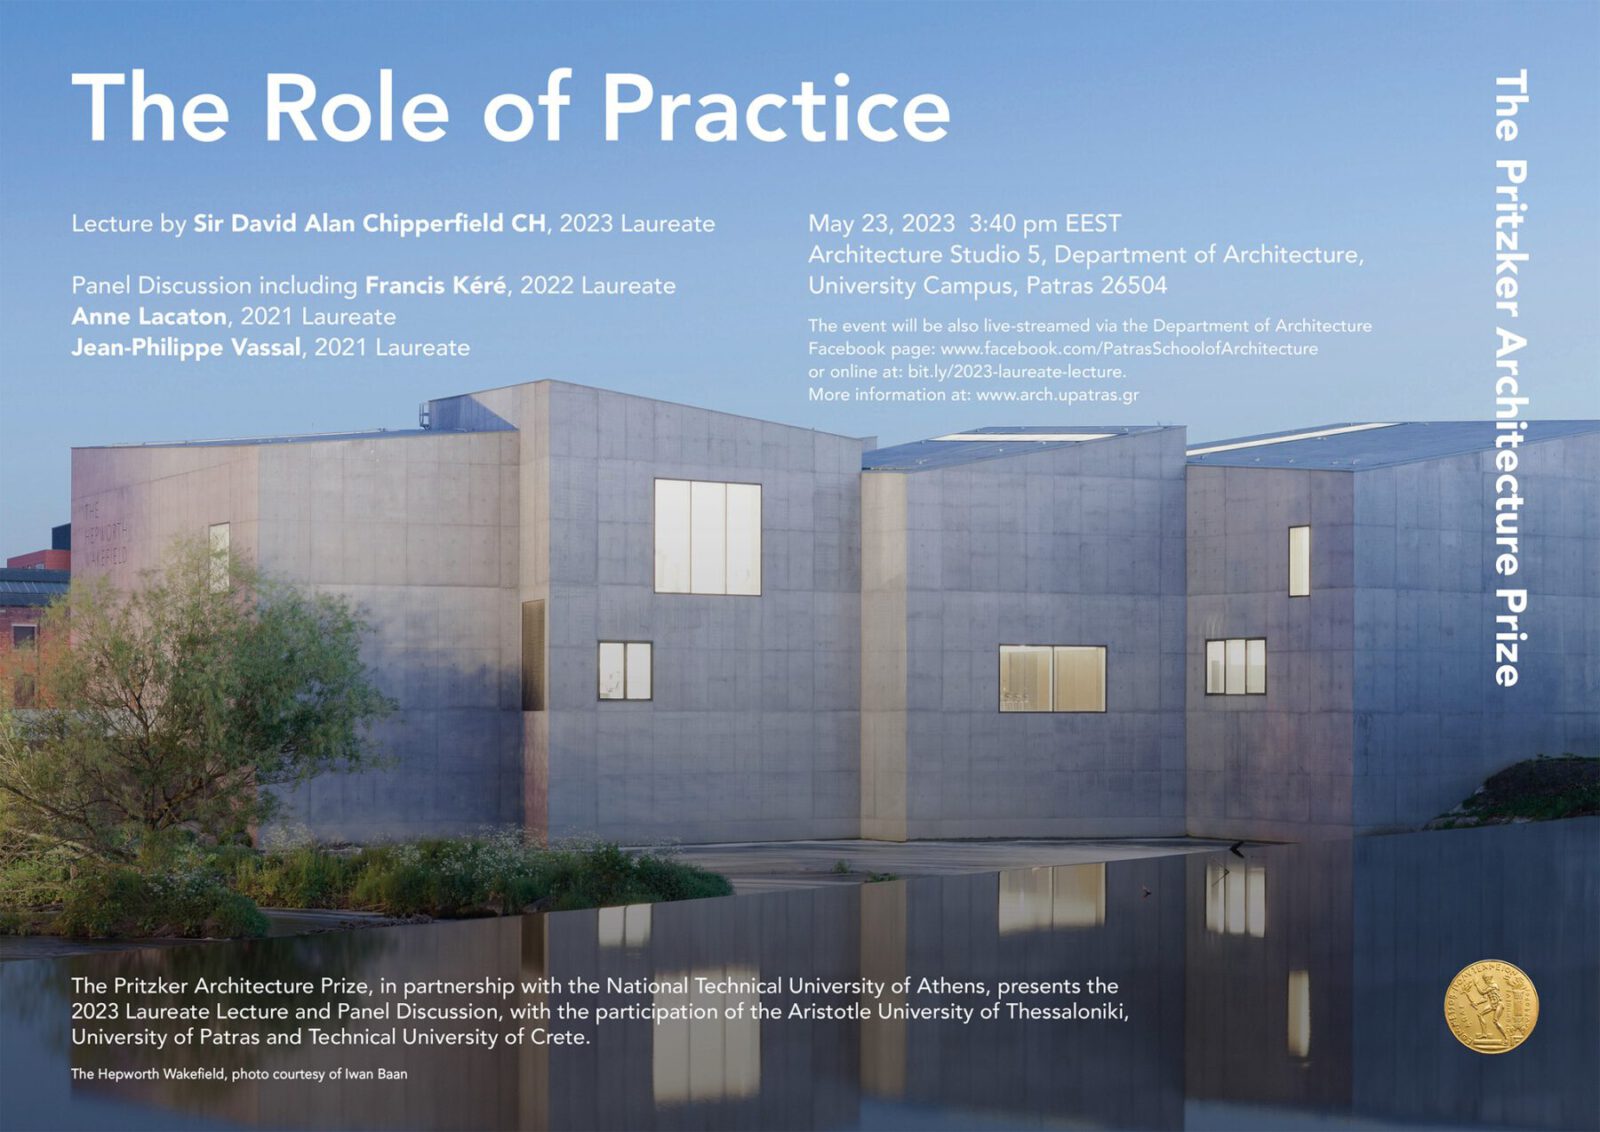 Archisearch The Pritzker Architecture Prize presents 